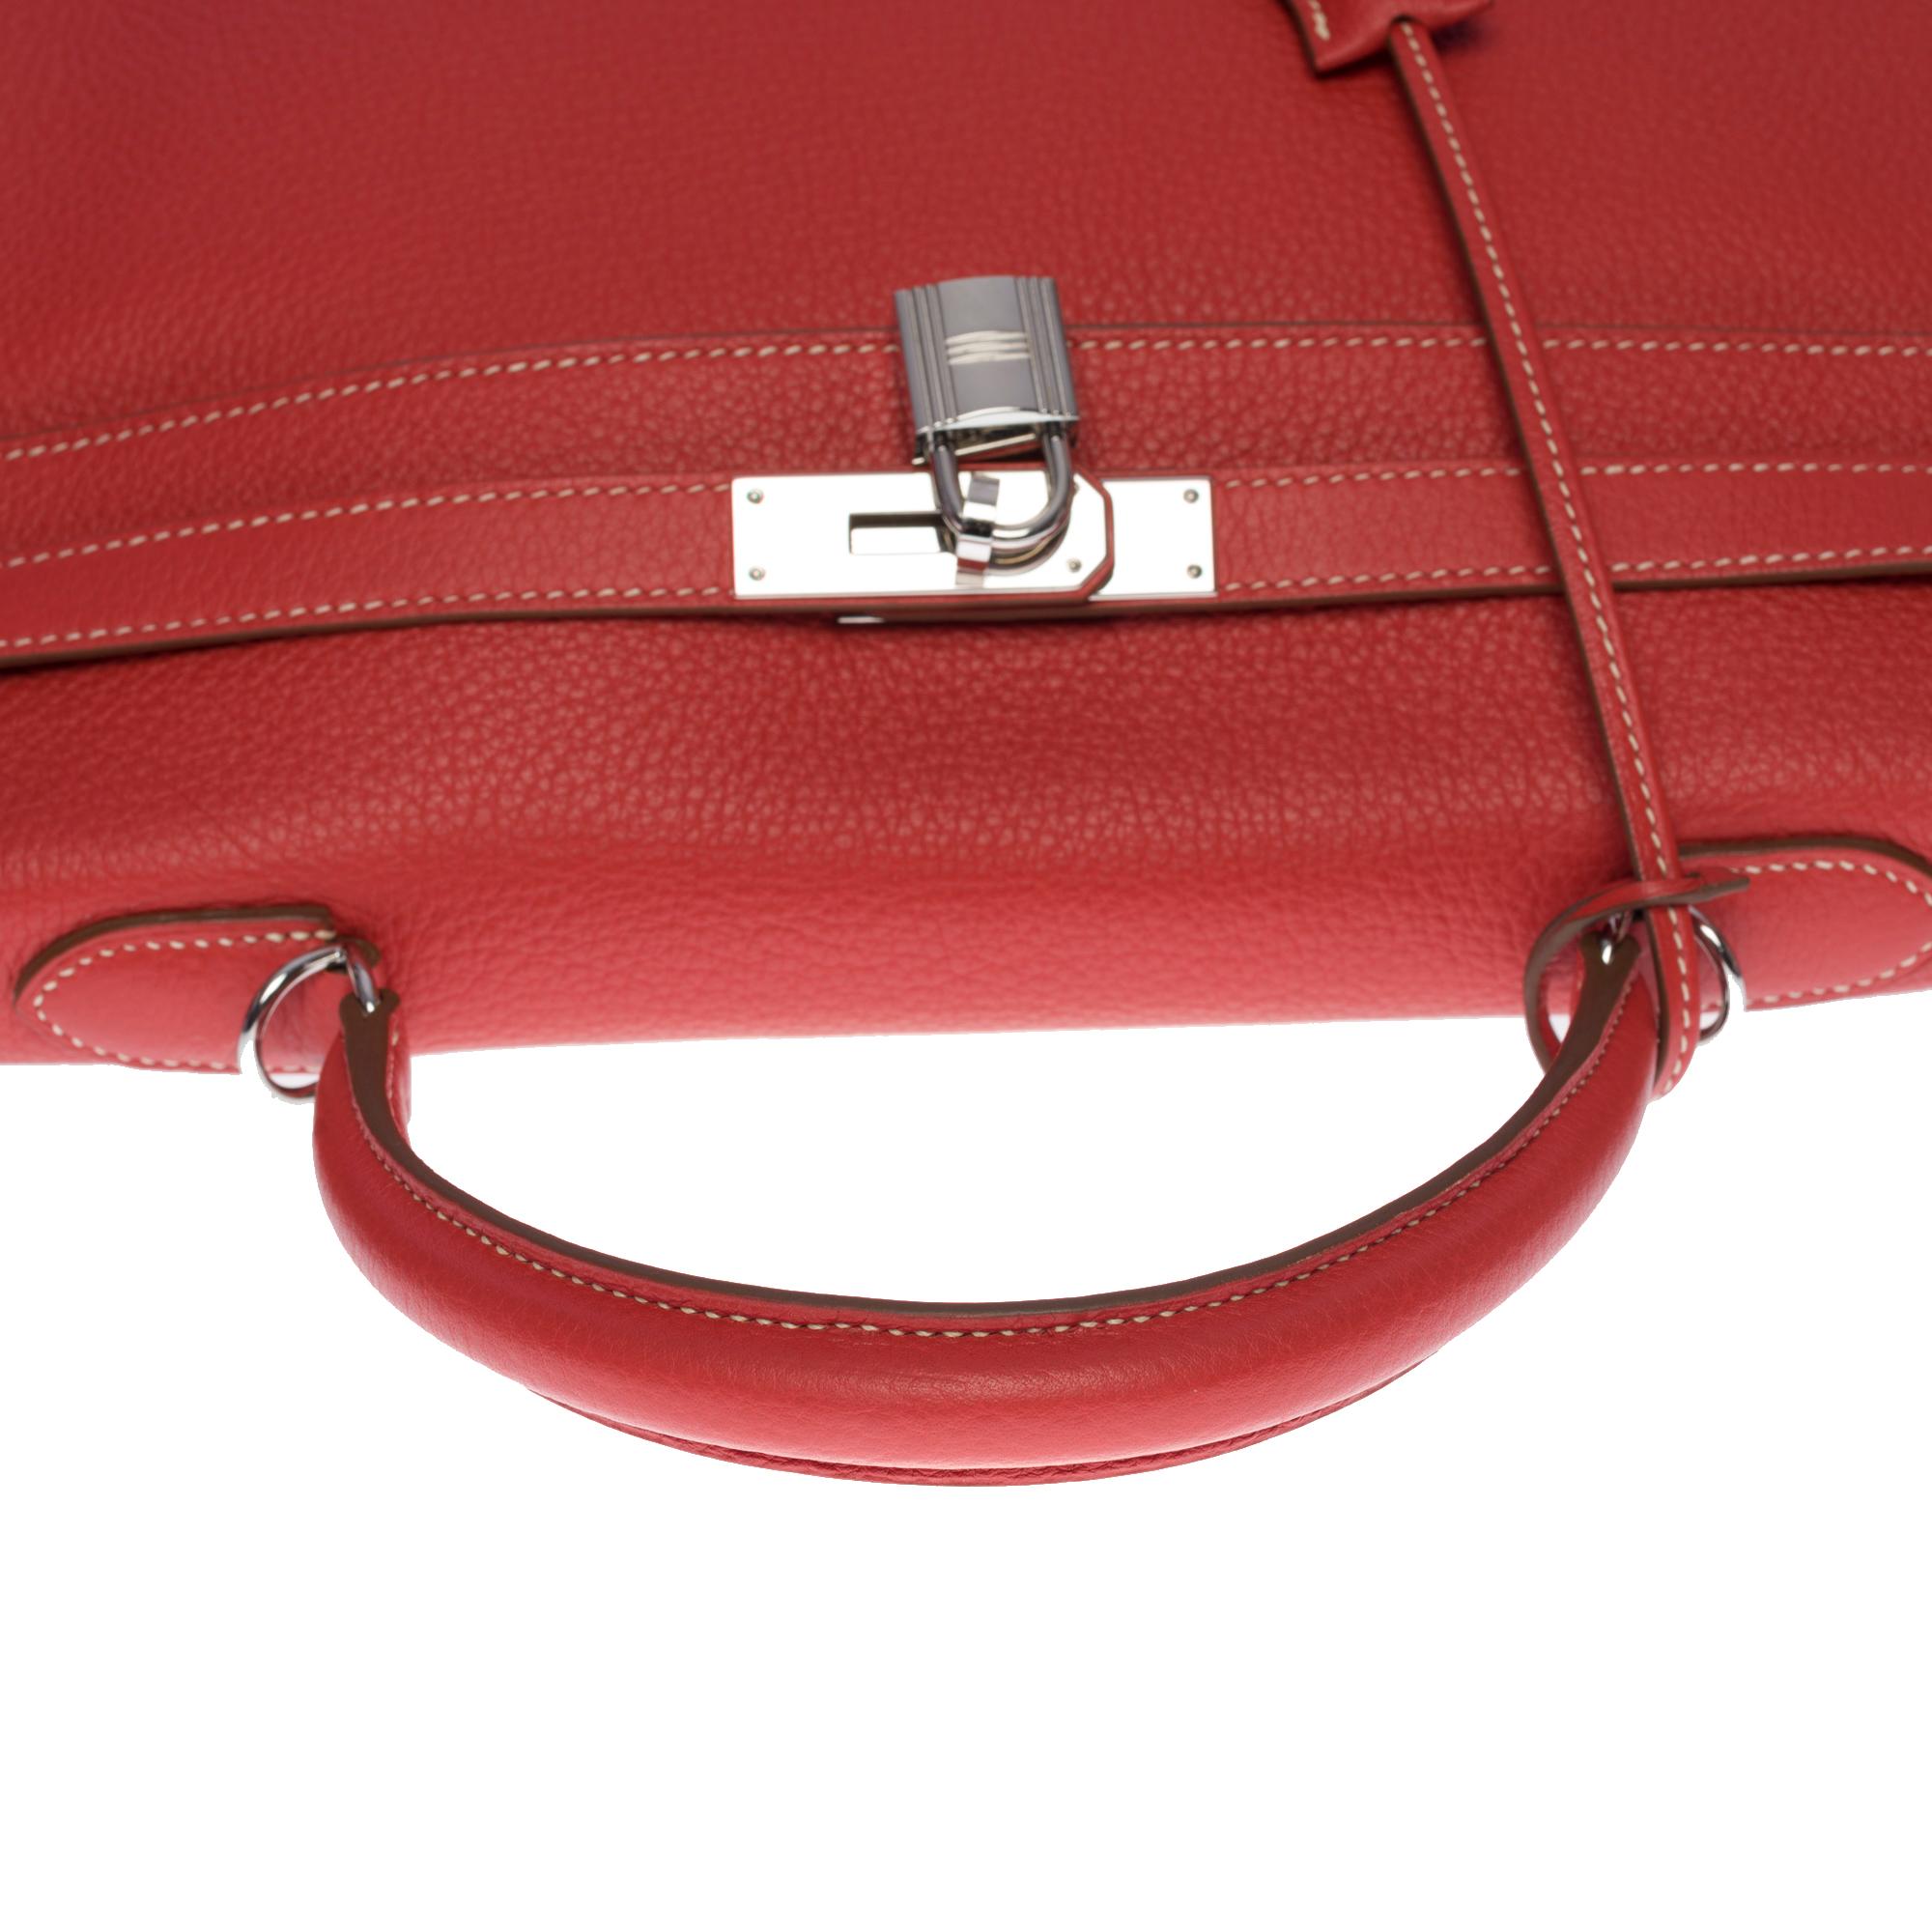 Hermès Kelly 35 retourne handbag strap in Pink Flamingo Togo leather , SHW 4